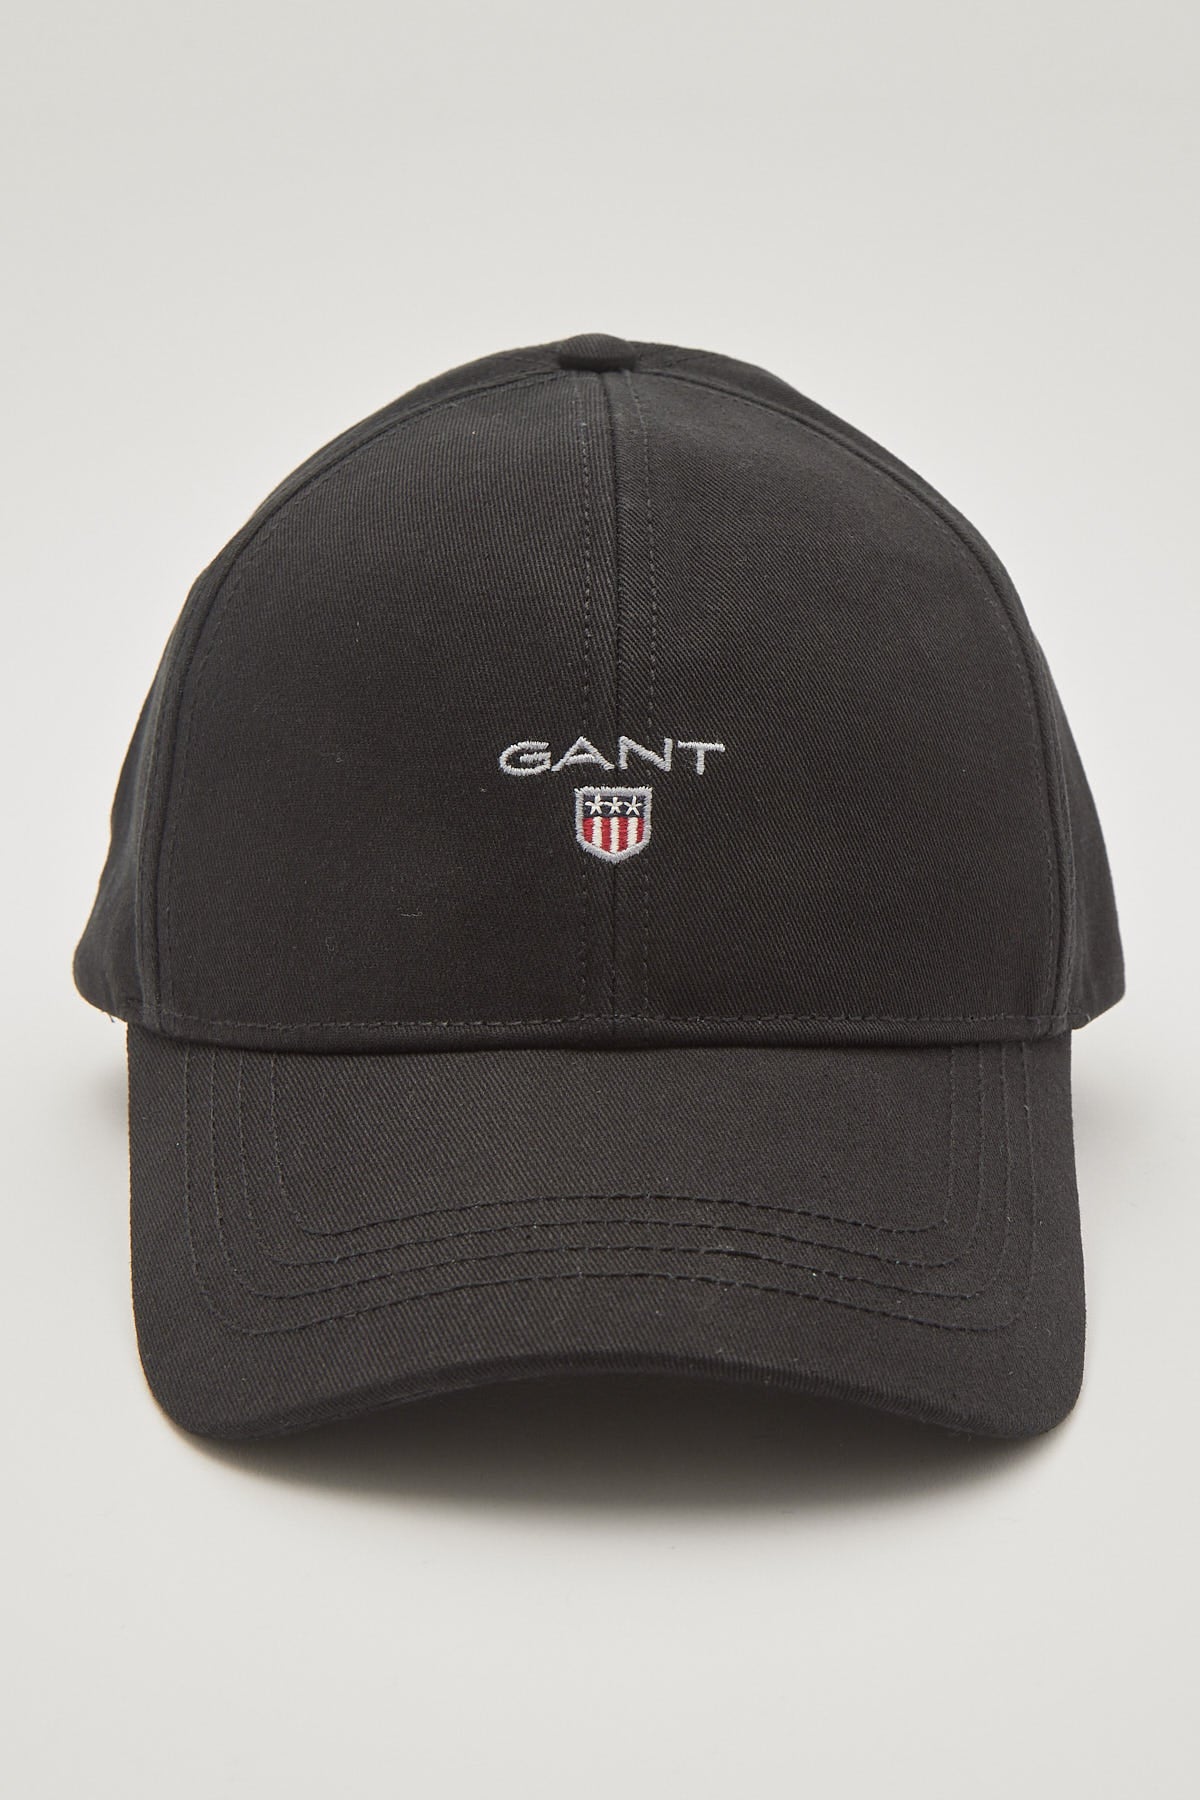 Gant High Cotton Twill Cap Black